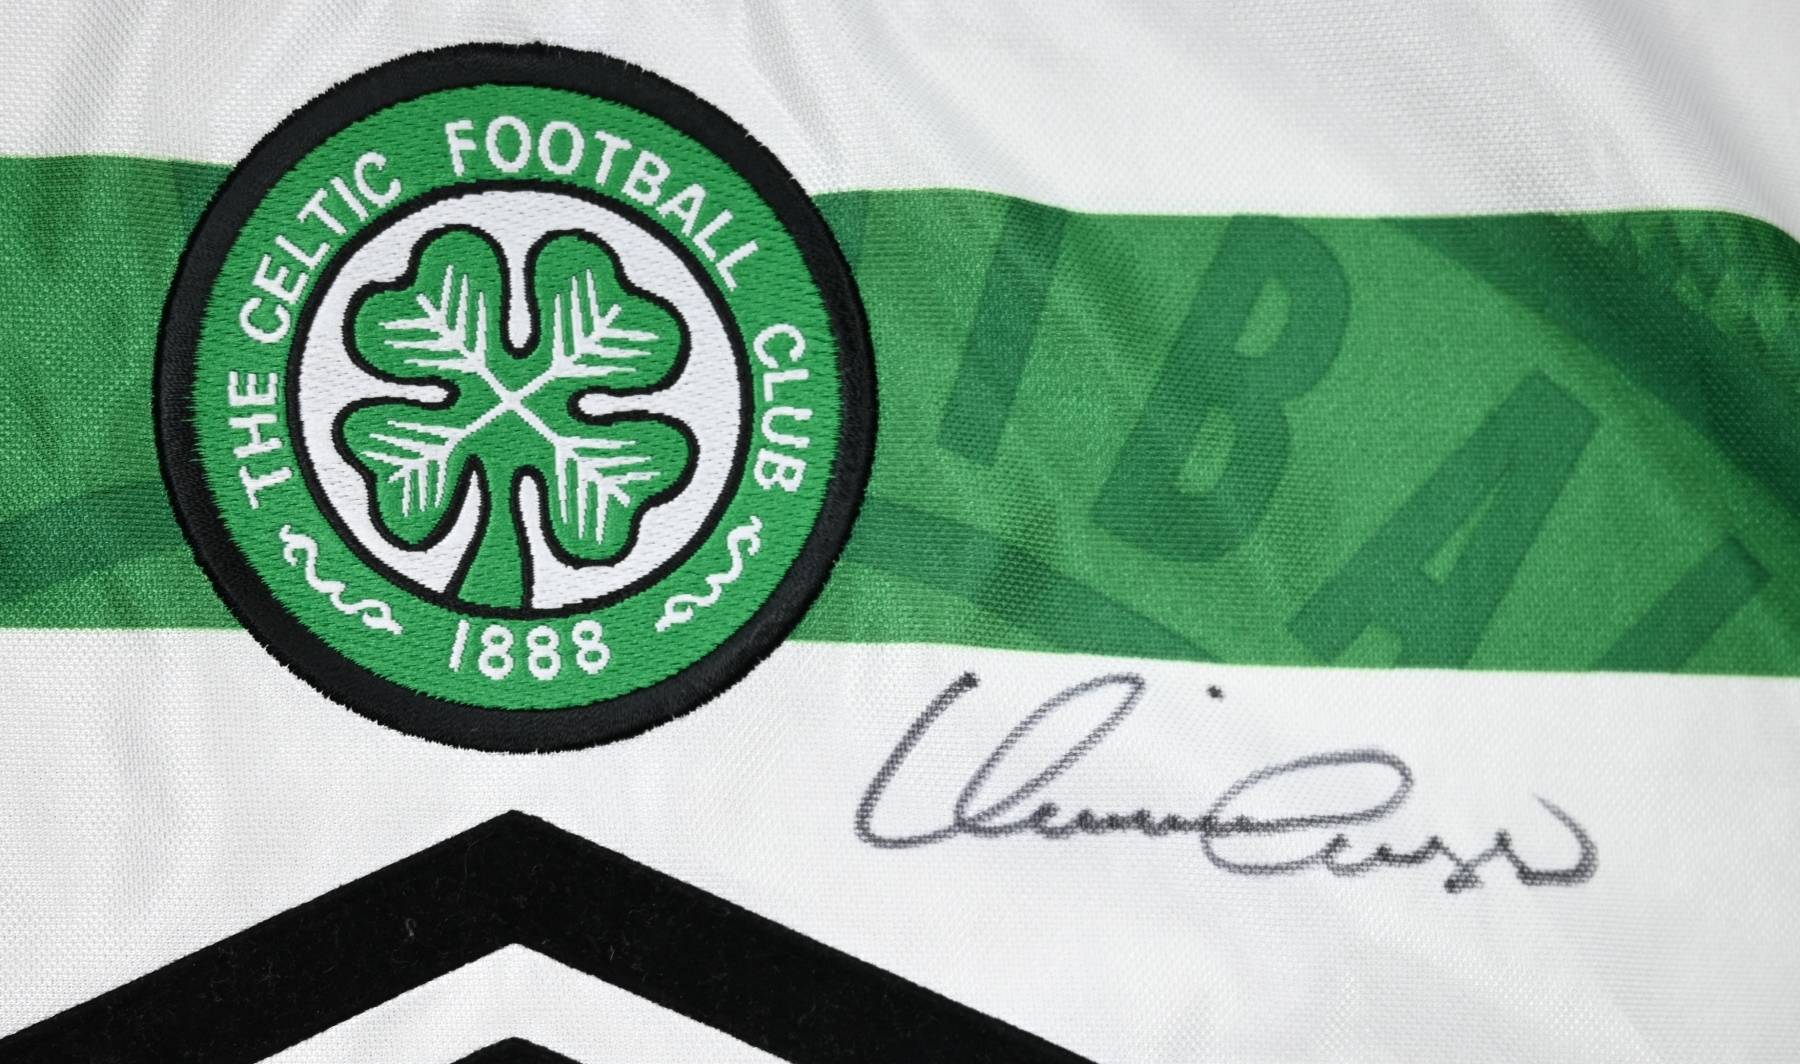 1997-99 Celtic 'Champions' Home Shirt